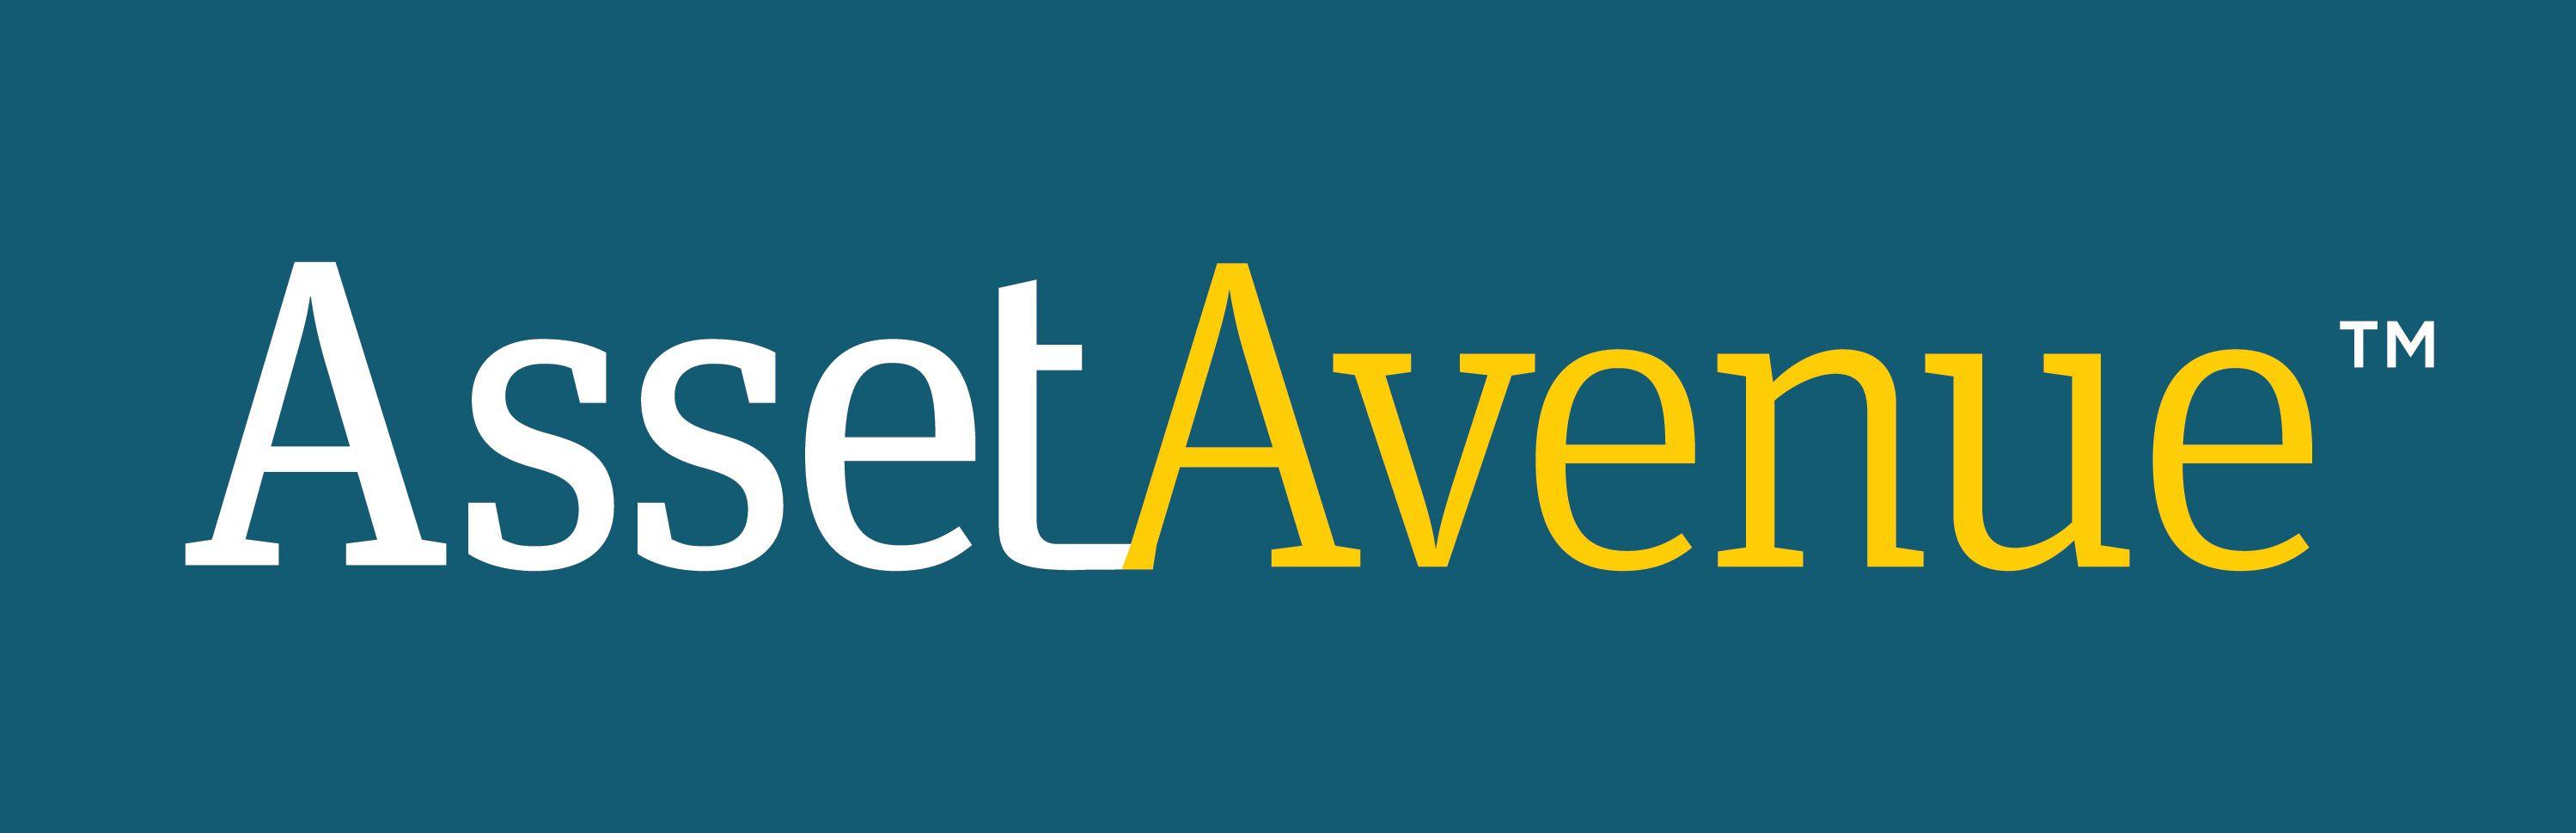 Assetavenue Logo - AssetAvenue logo_new (1) - TechZuluTechZulu